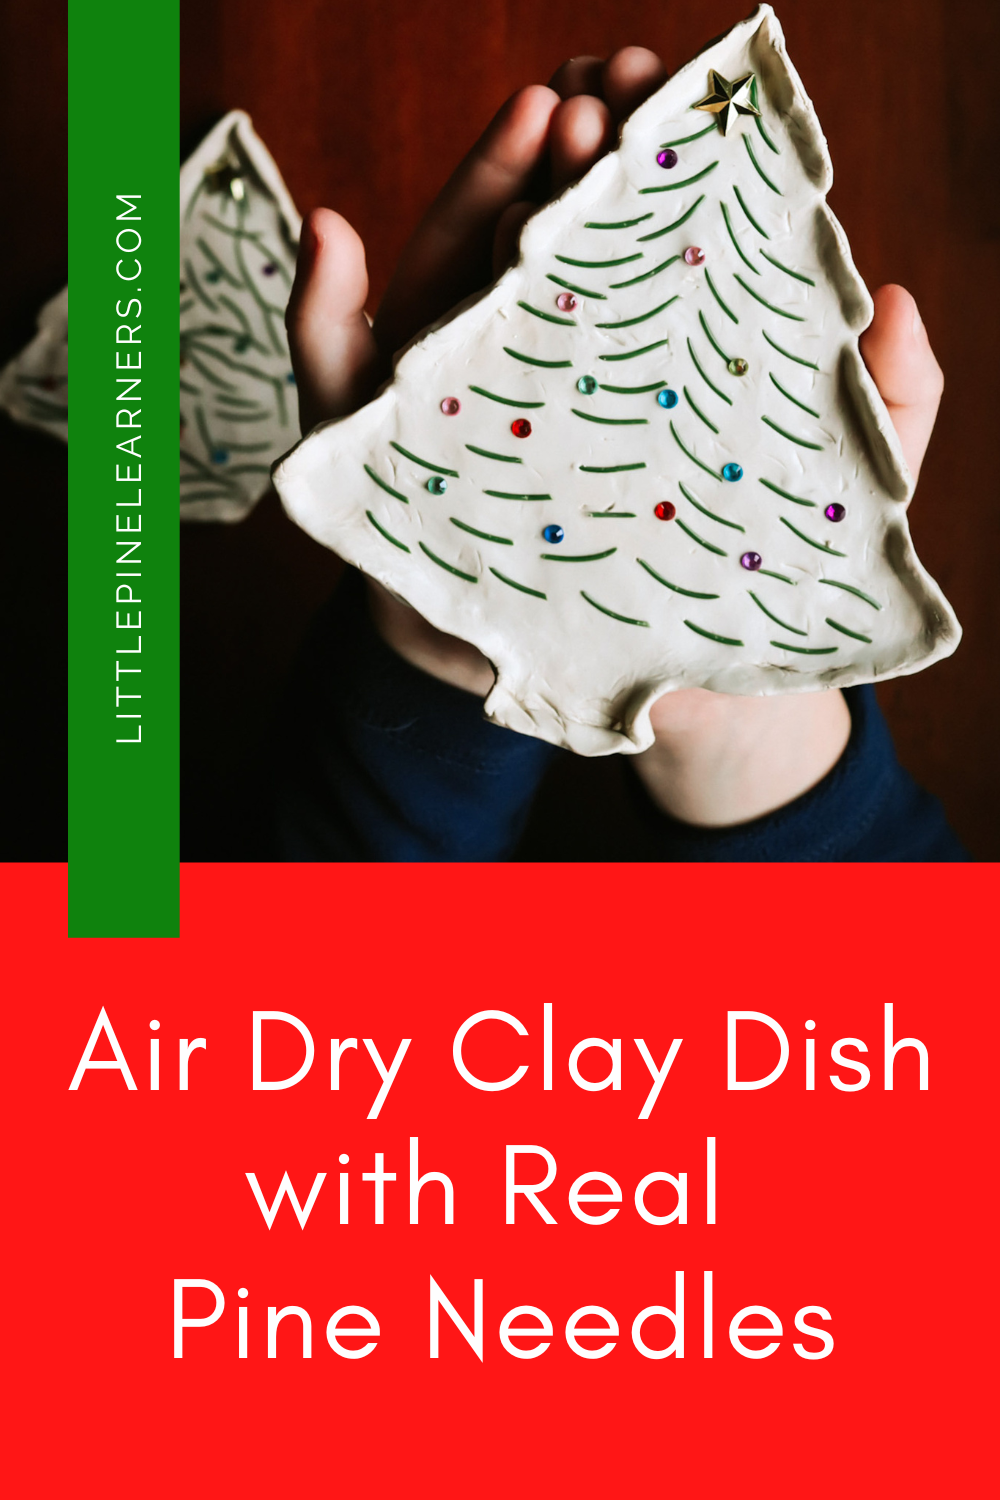 Air dry clay dish